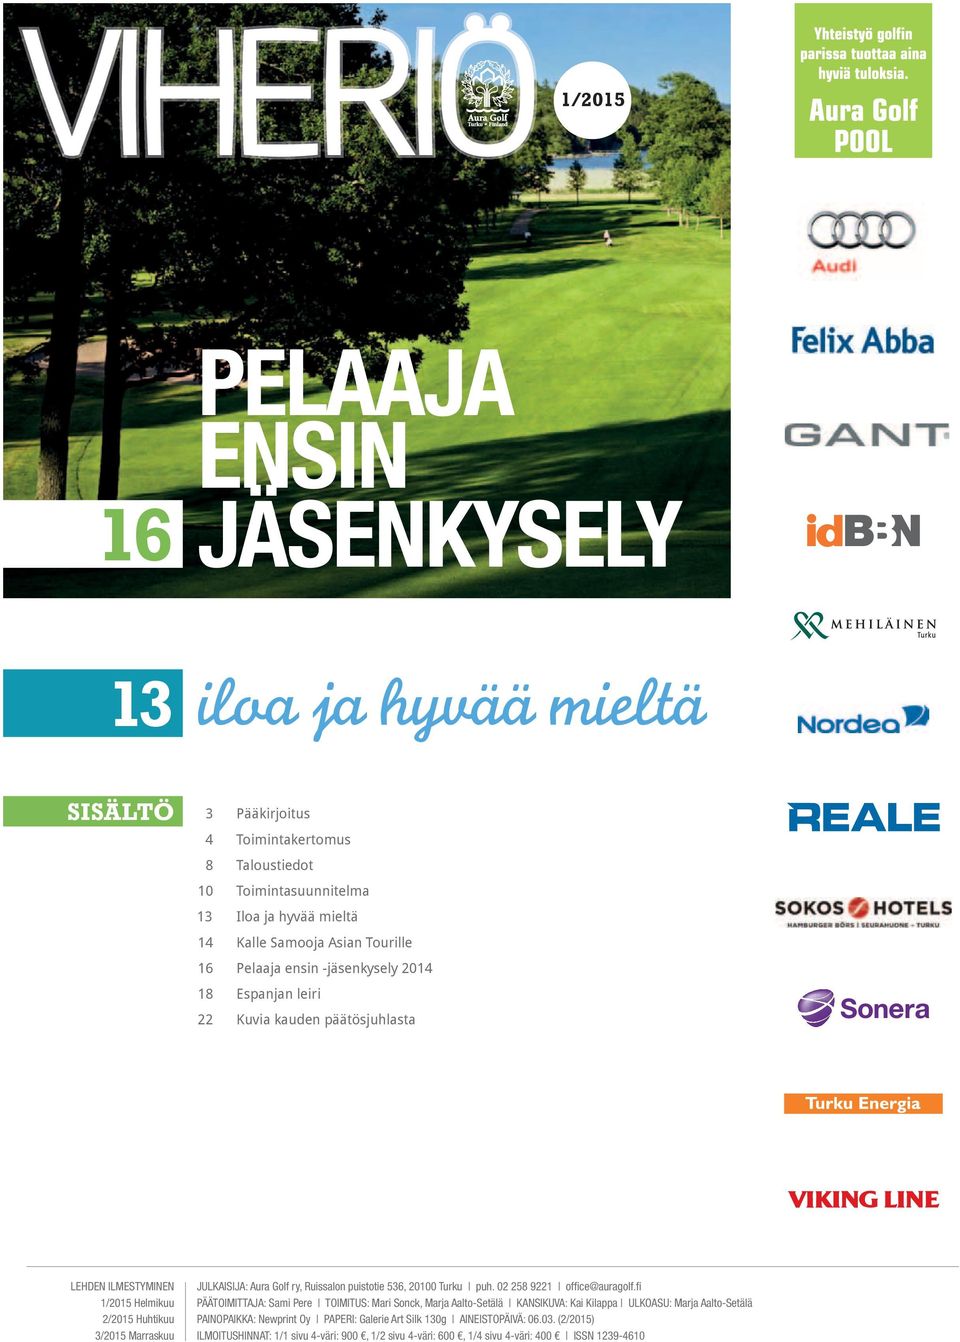 Golf ry, Ruissalon puistotie 536, 20100 Turku puh. 02 258 9221 offi ce@auragolf.